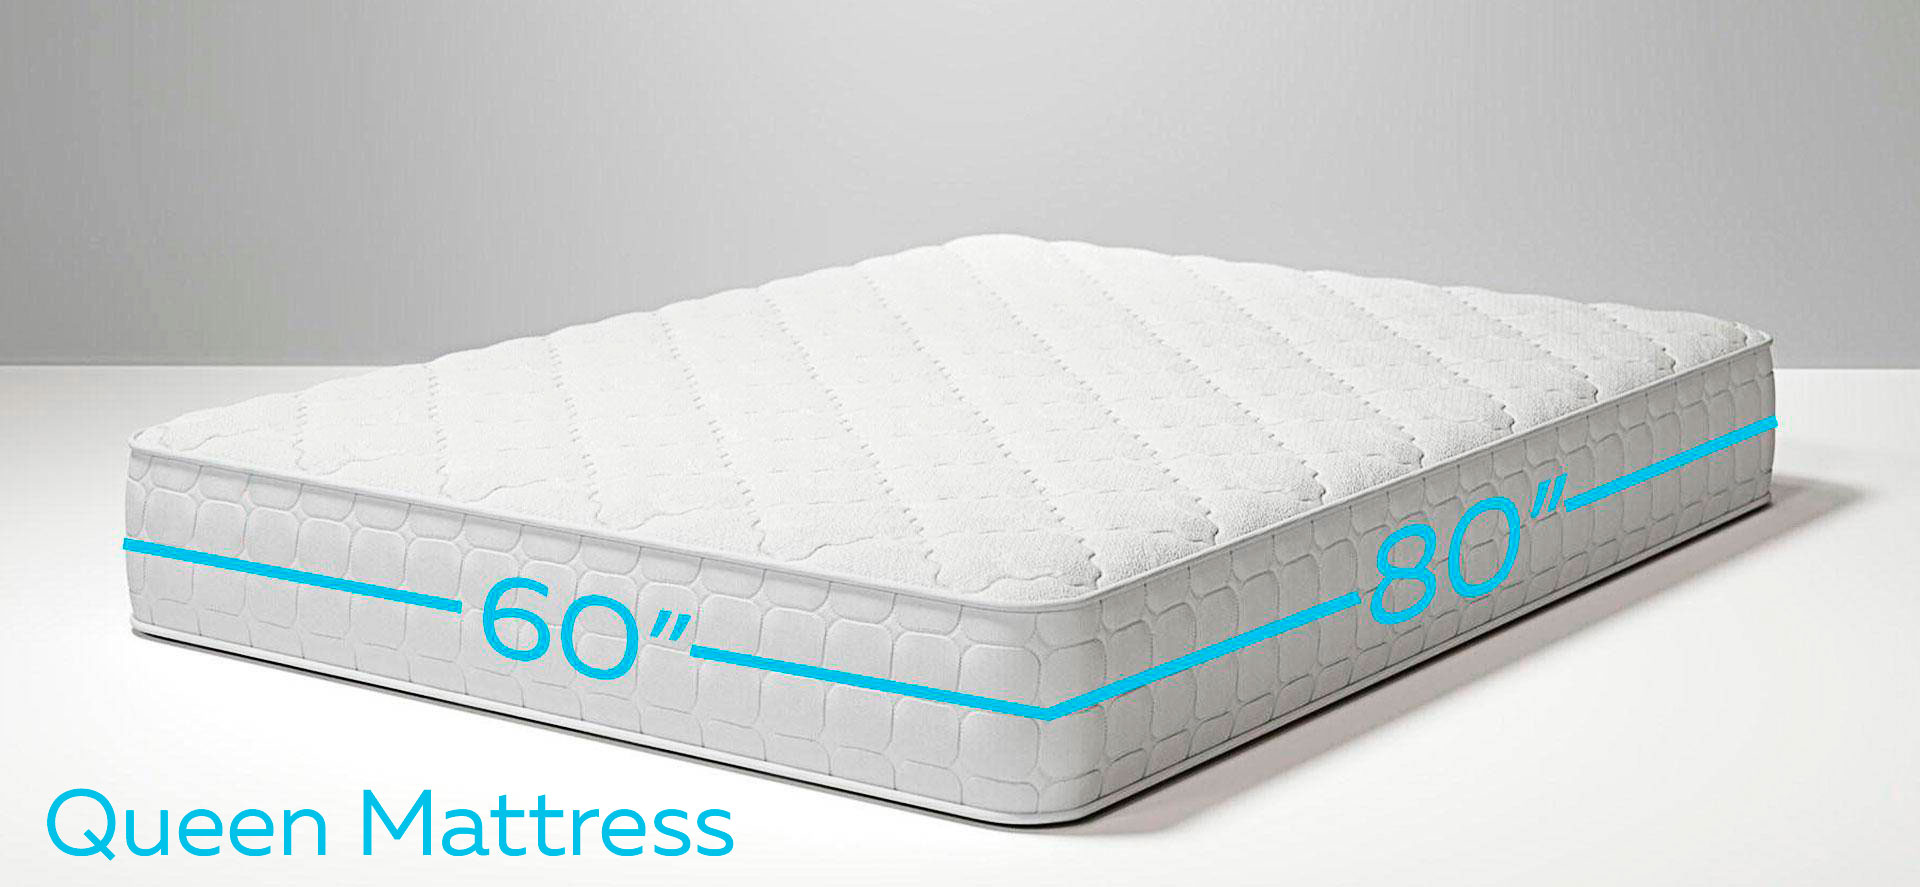 Queen size mattress dimensions.